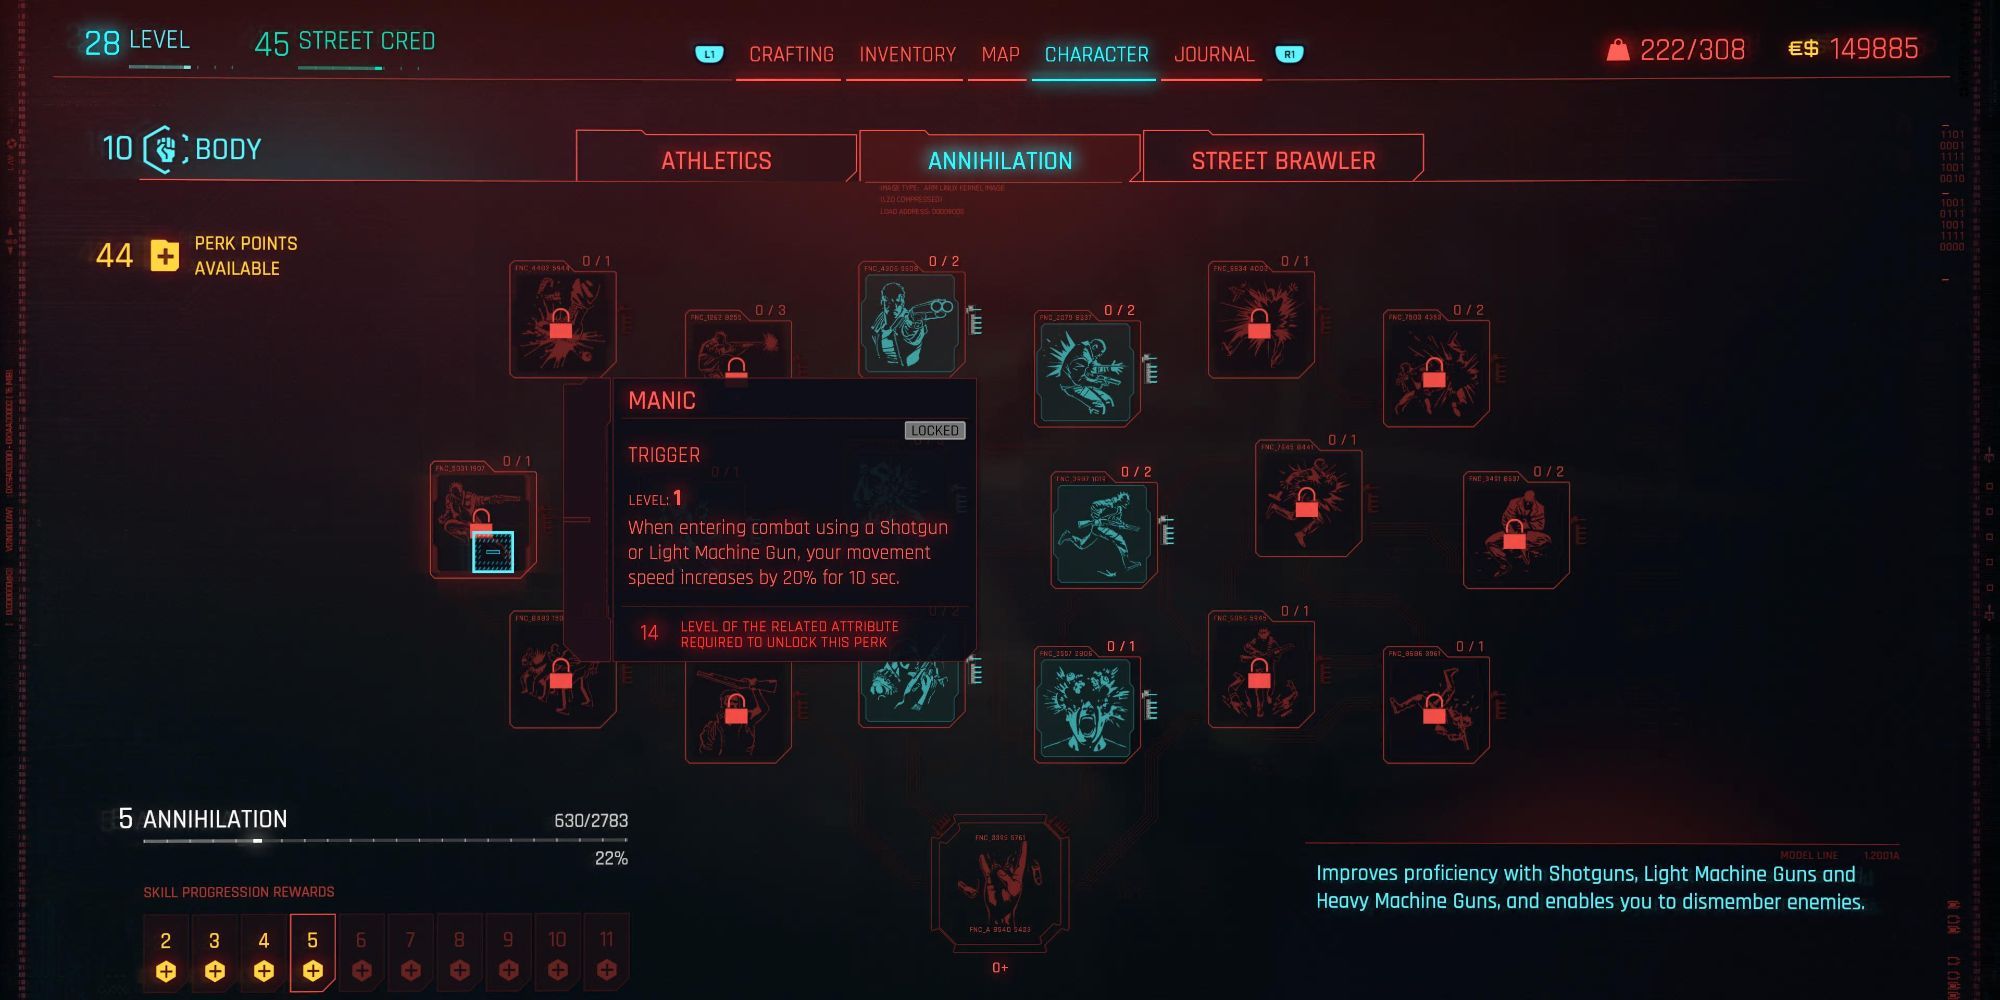 Cyberpunk 2077 Annihilation Manic Skill Tree